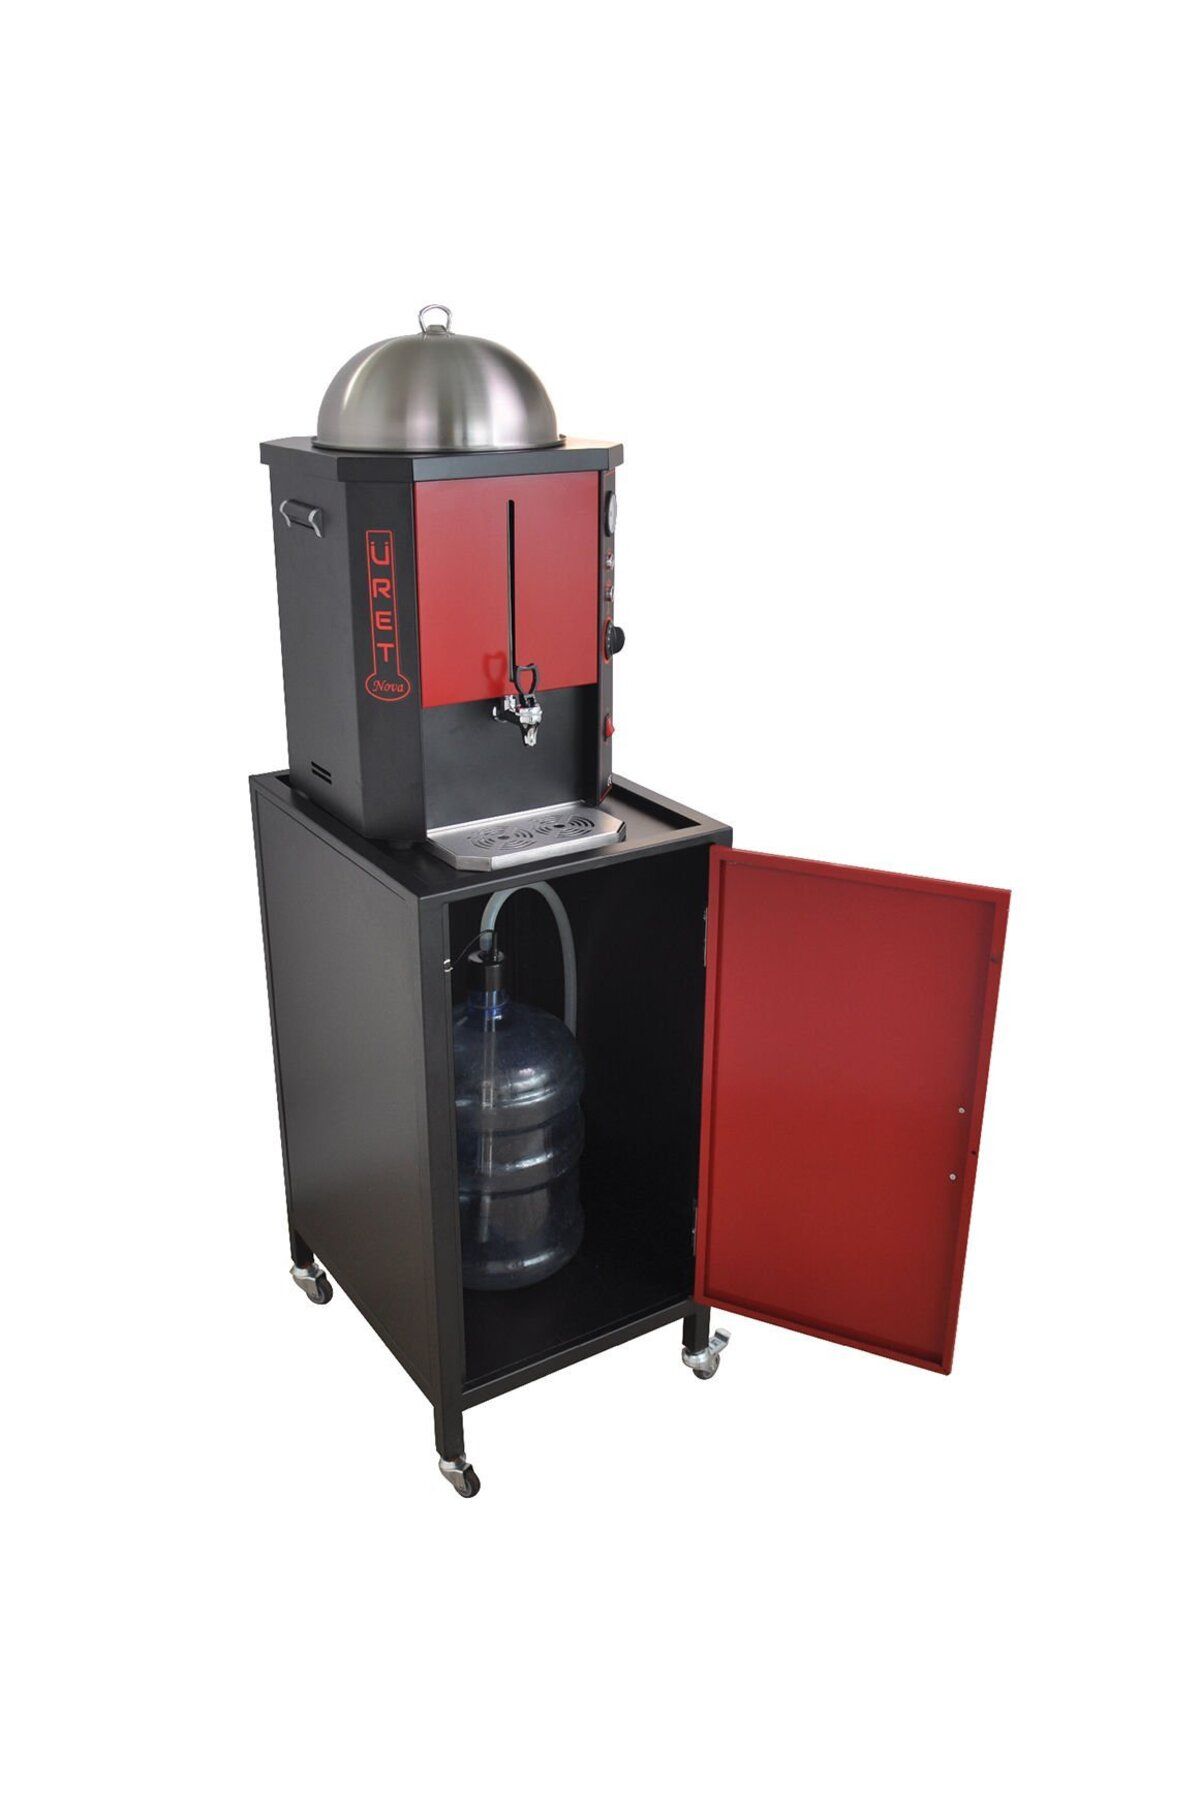 Üret Çelik 36 Litre Filtreli Kahve Makinesi – 150 Fincan Fnv 2